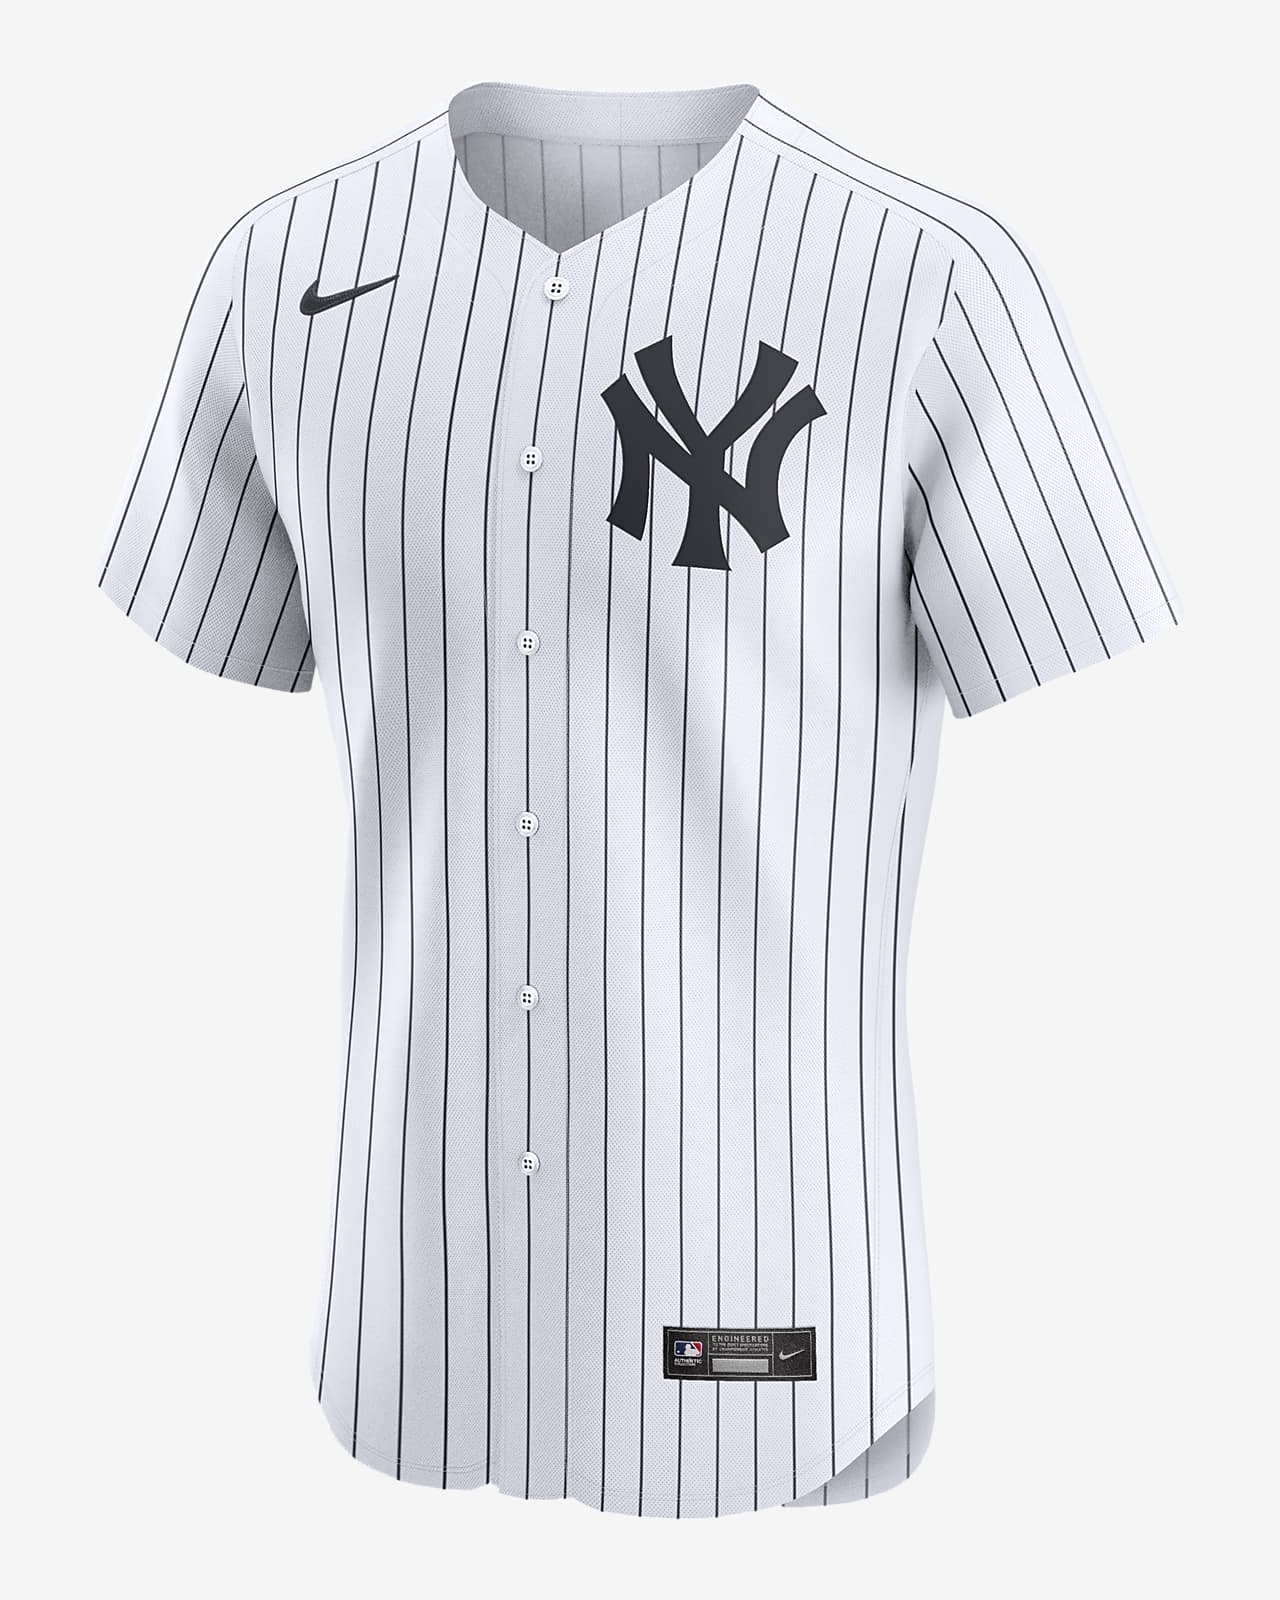 Jersey Nike Dri-FIT ADV de la MLB Elite para hombre New York Yankees